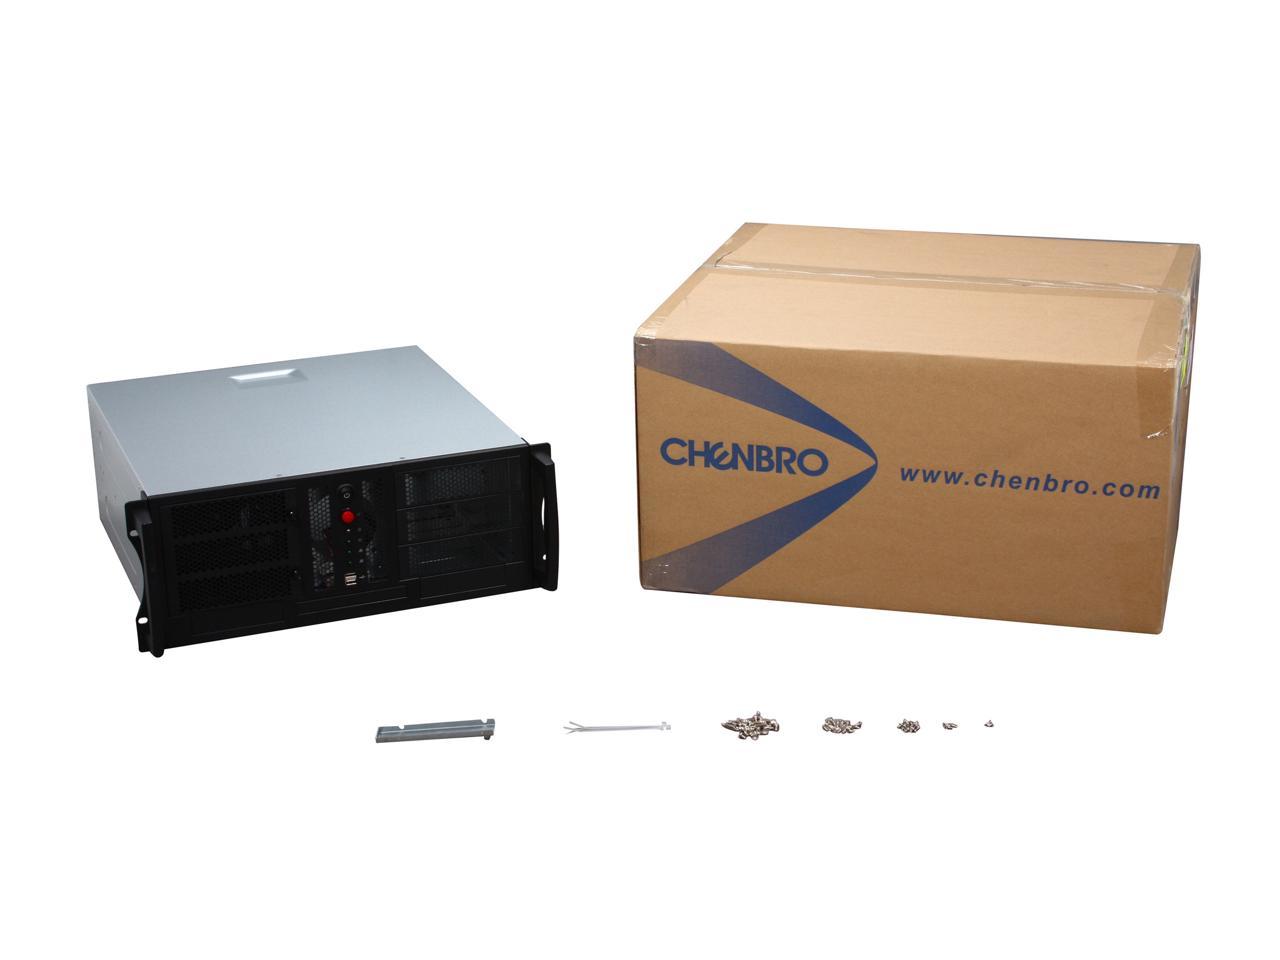 Chenbro Rm42300-F 1.2 Mm Sgcc 4U Rackmount Server Case 3 External 5.25" Drive Bays